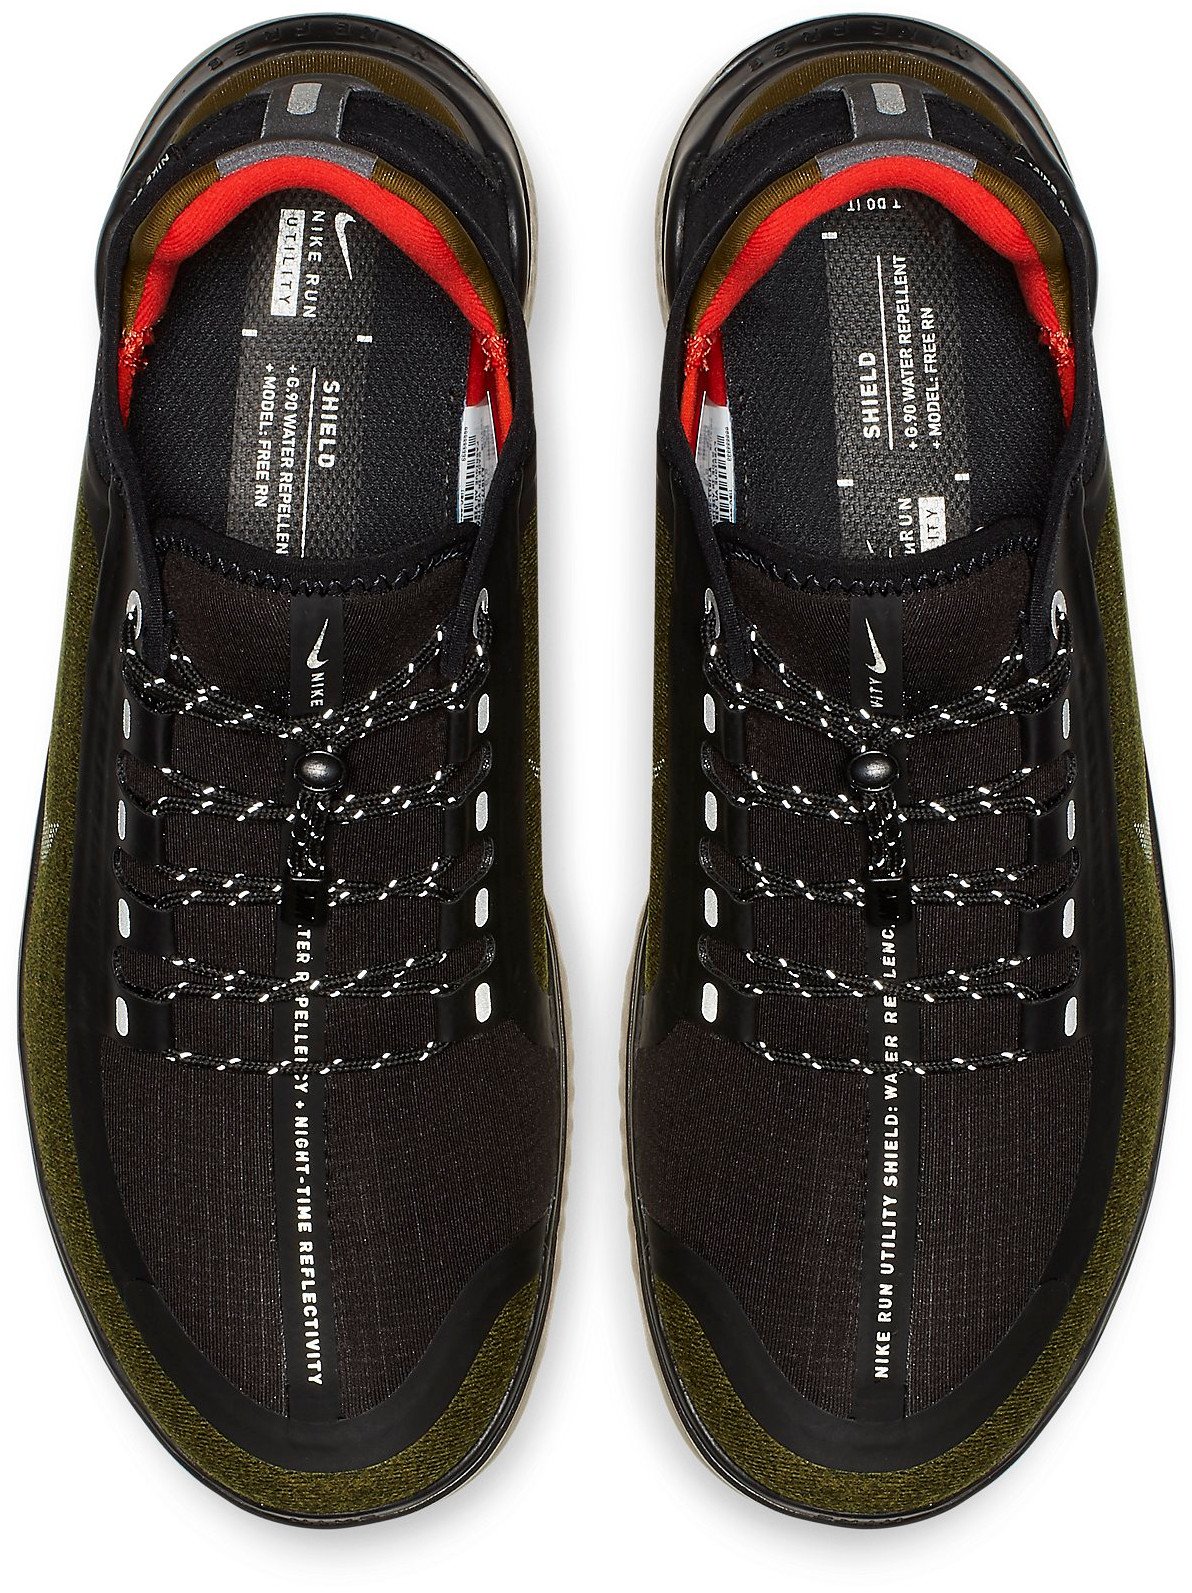 Running shoes Nike FREE SHIELD - Top4Football.com